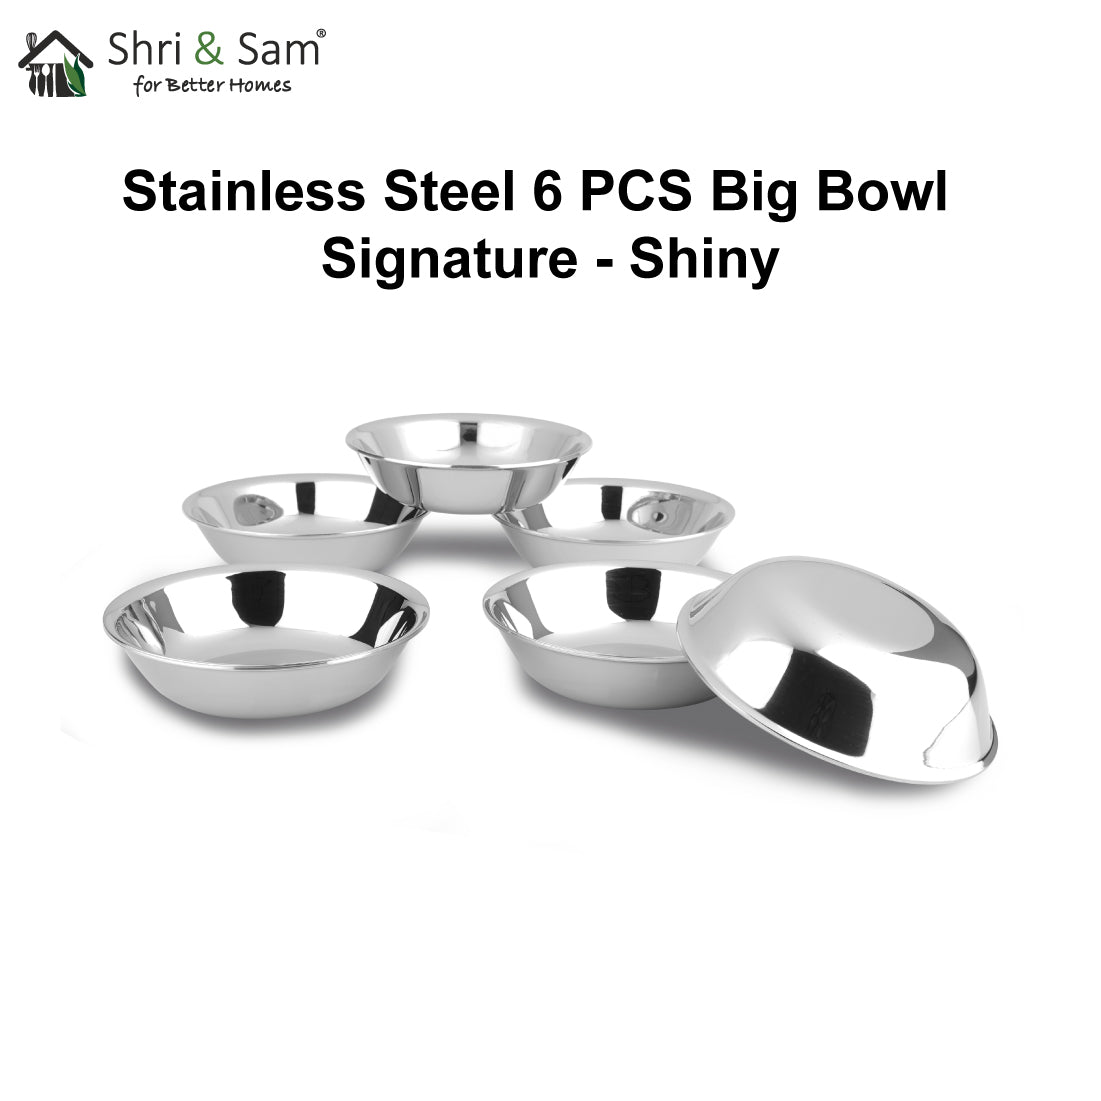 Stainless Steel 6 PCS Big Bowl Signature - Shiny